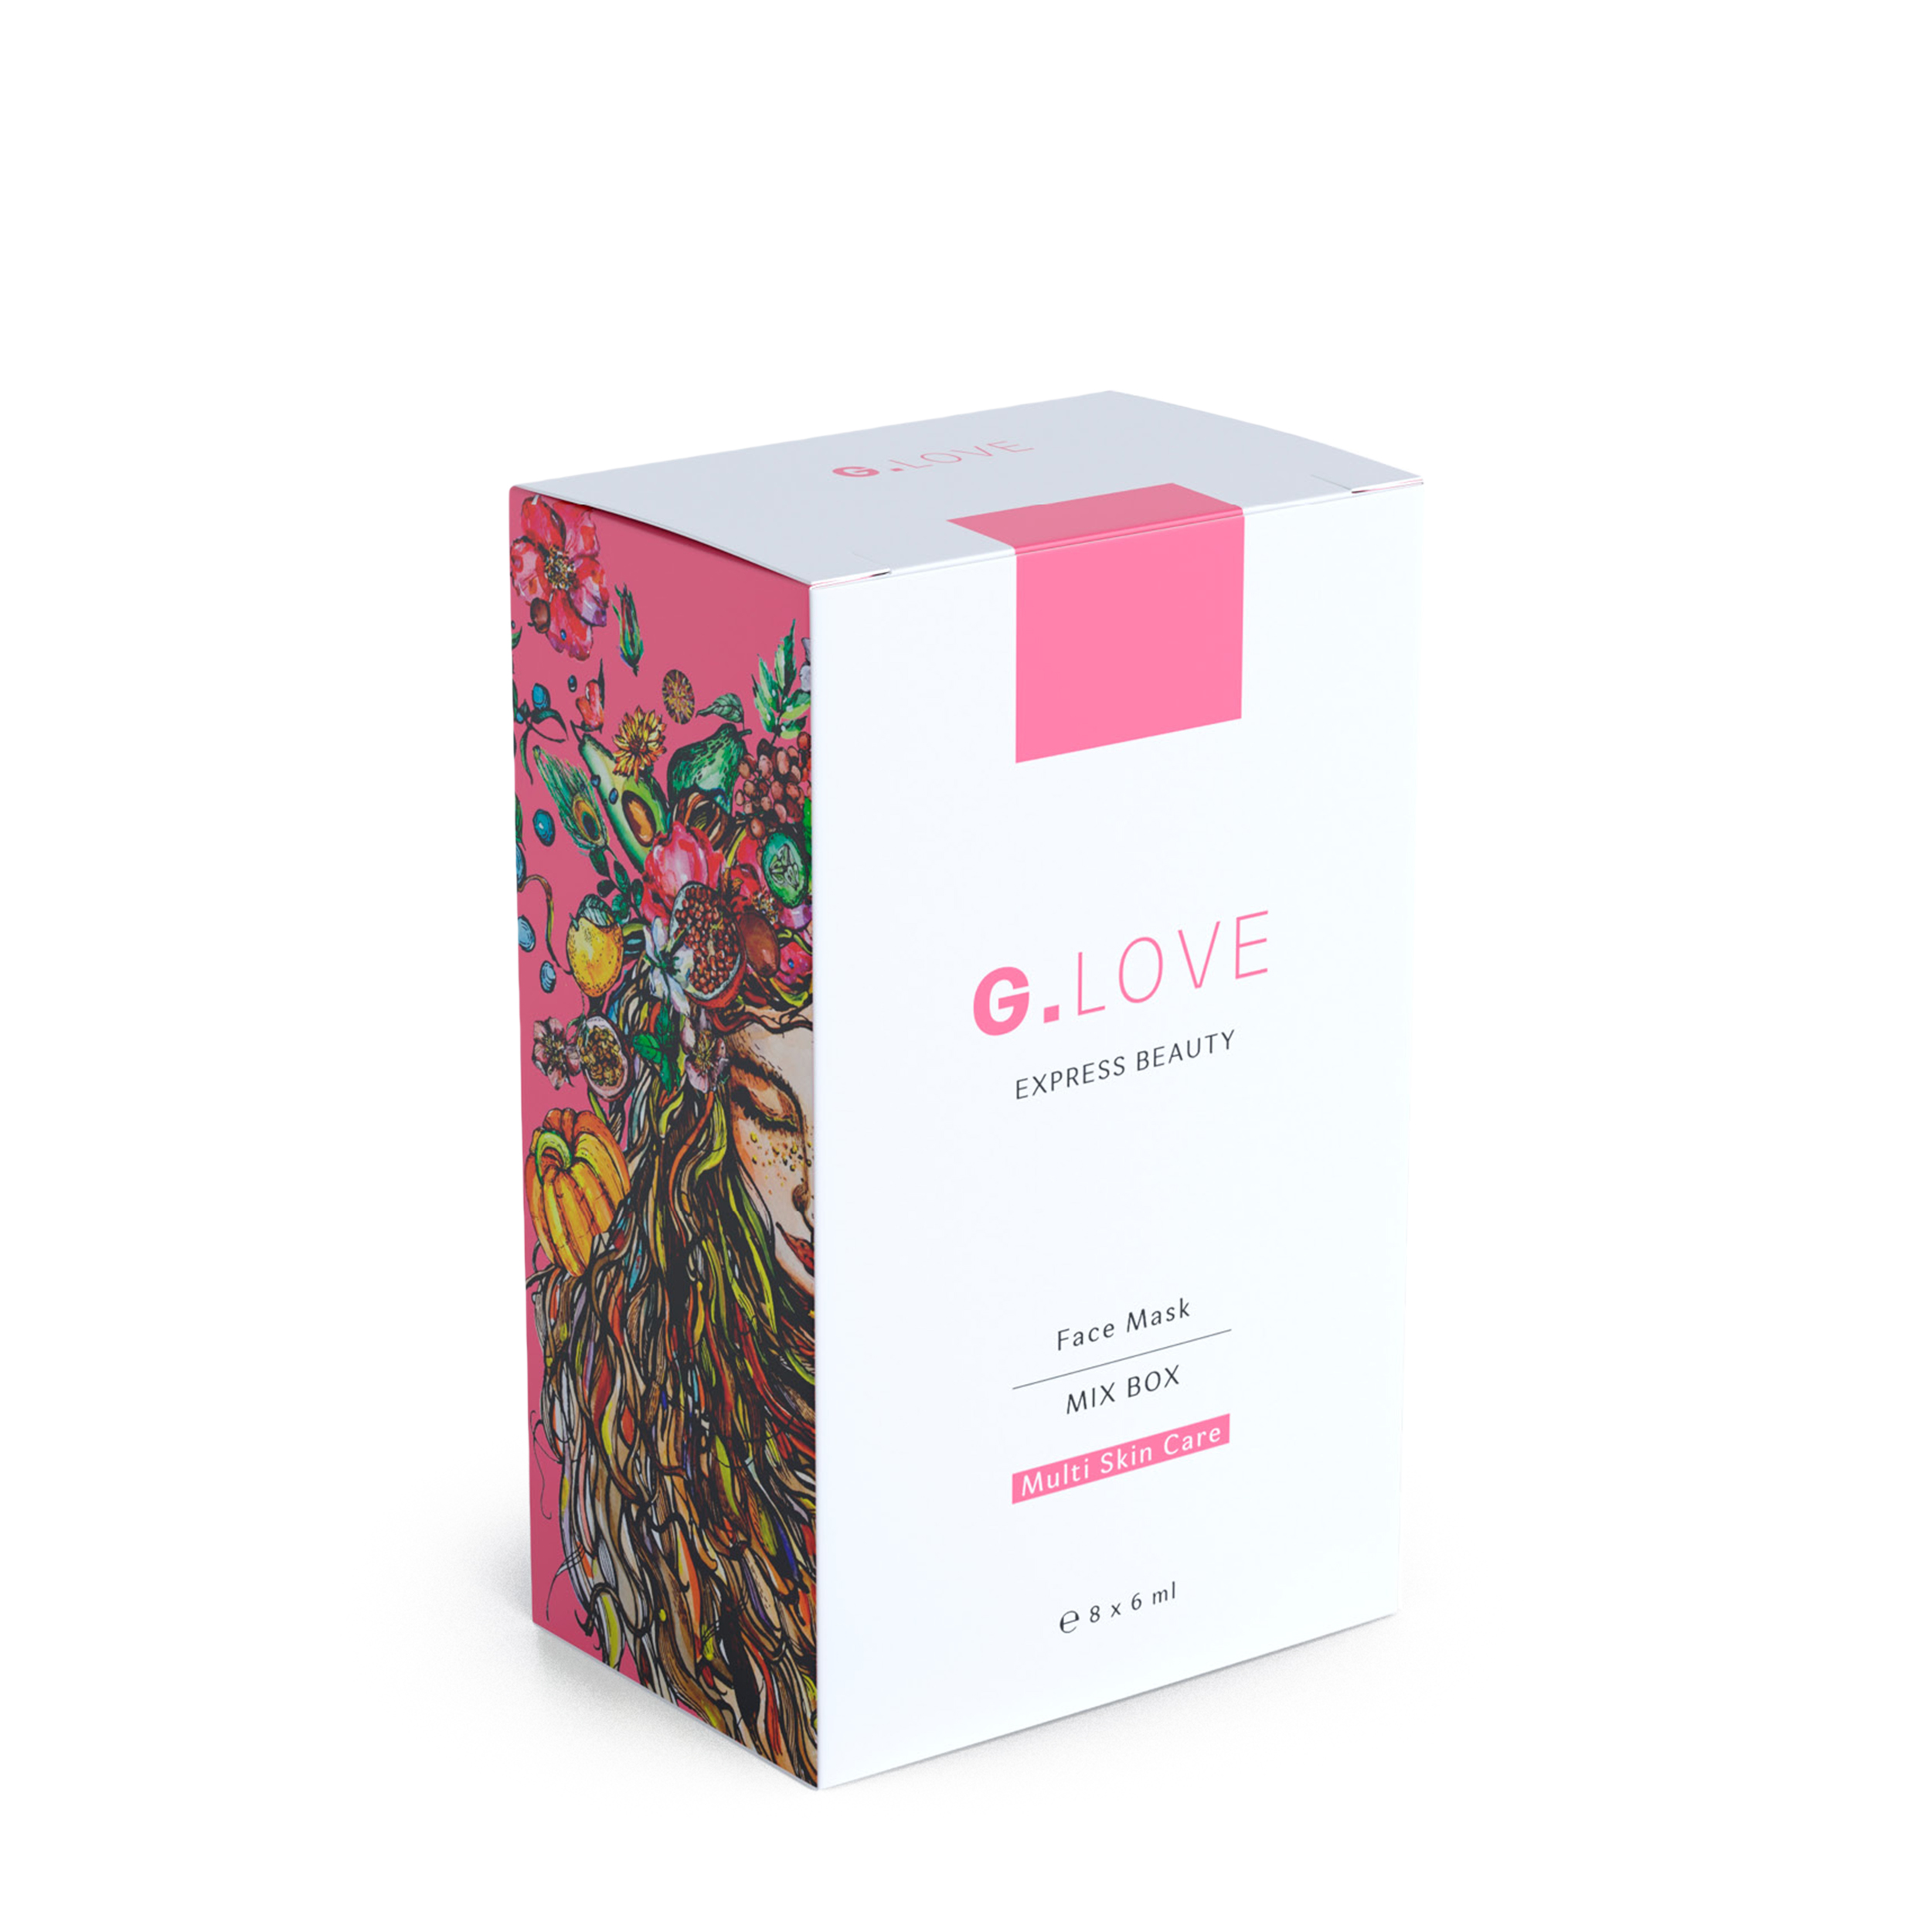 G.LOVE G.LOVE Набор масок для лица Mix Box 8x6 мл